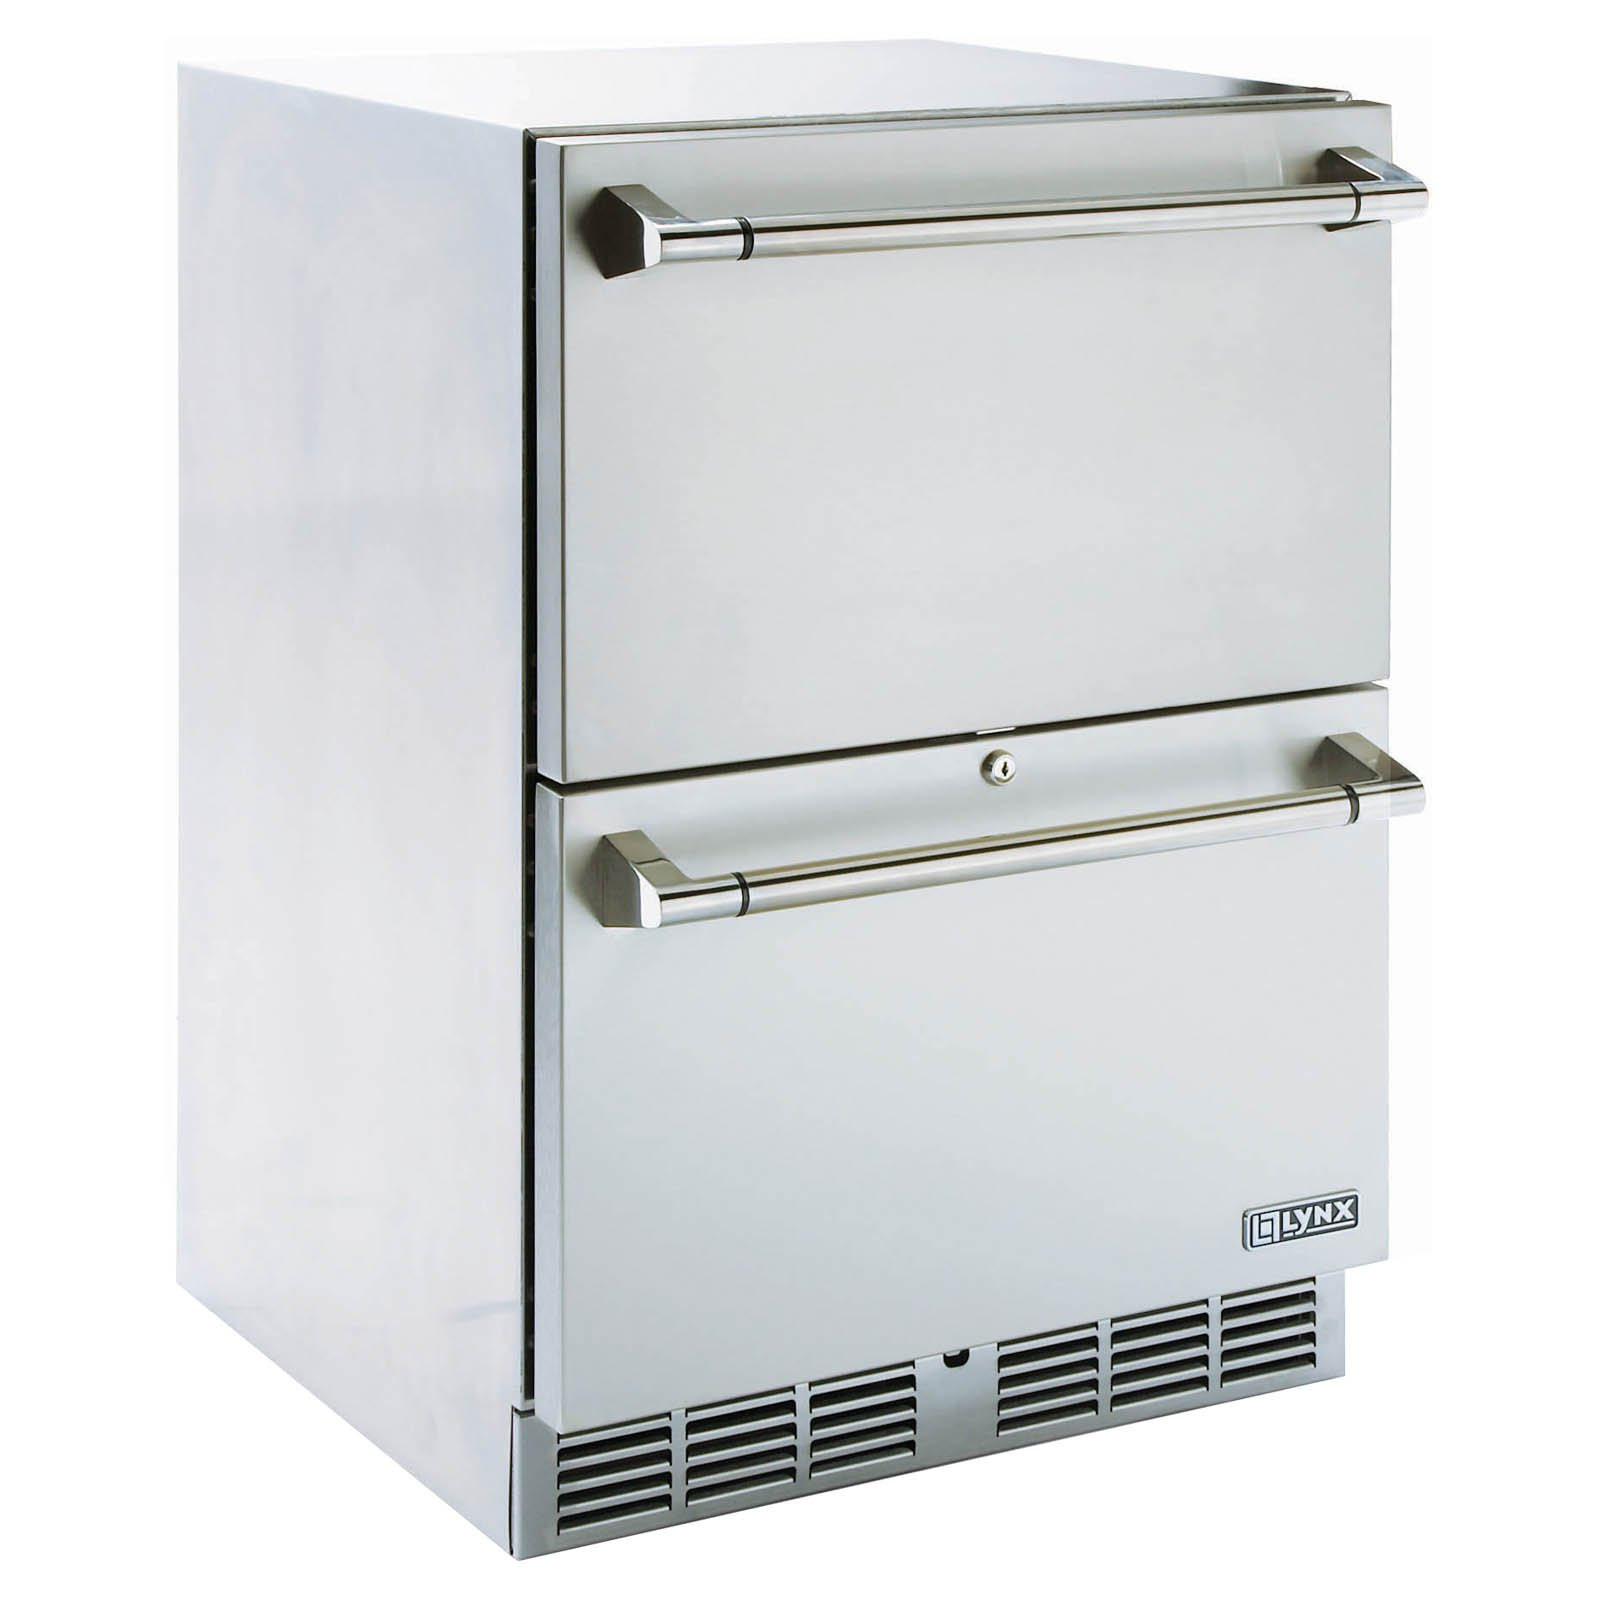 Outdoor Kitchen Refrigerator
 Lynx Professional Two Drawer Refrigerator Outdoor